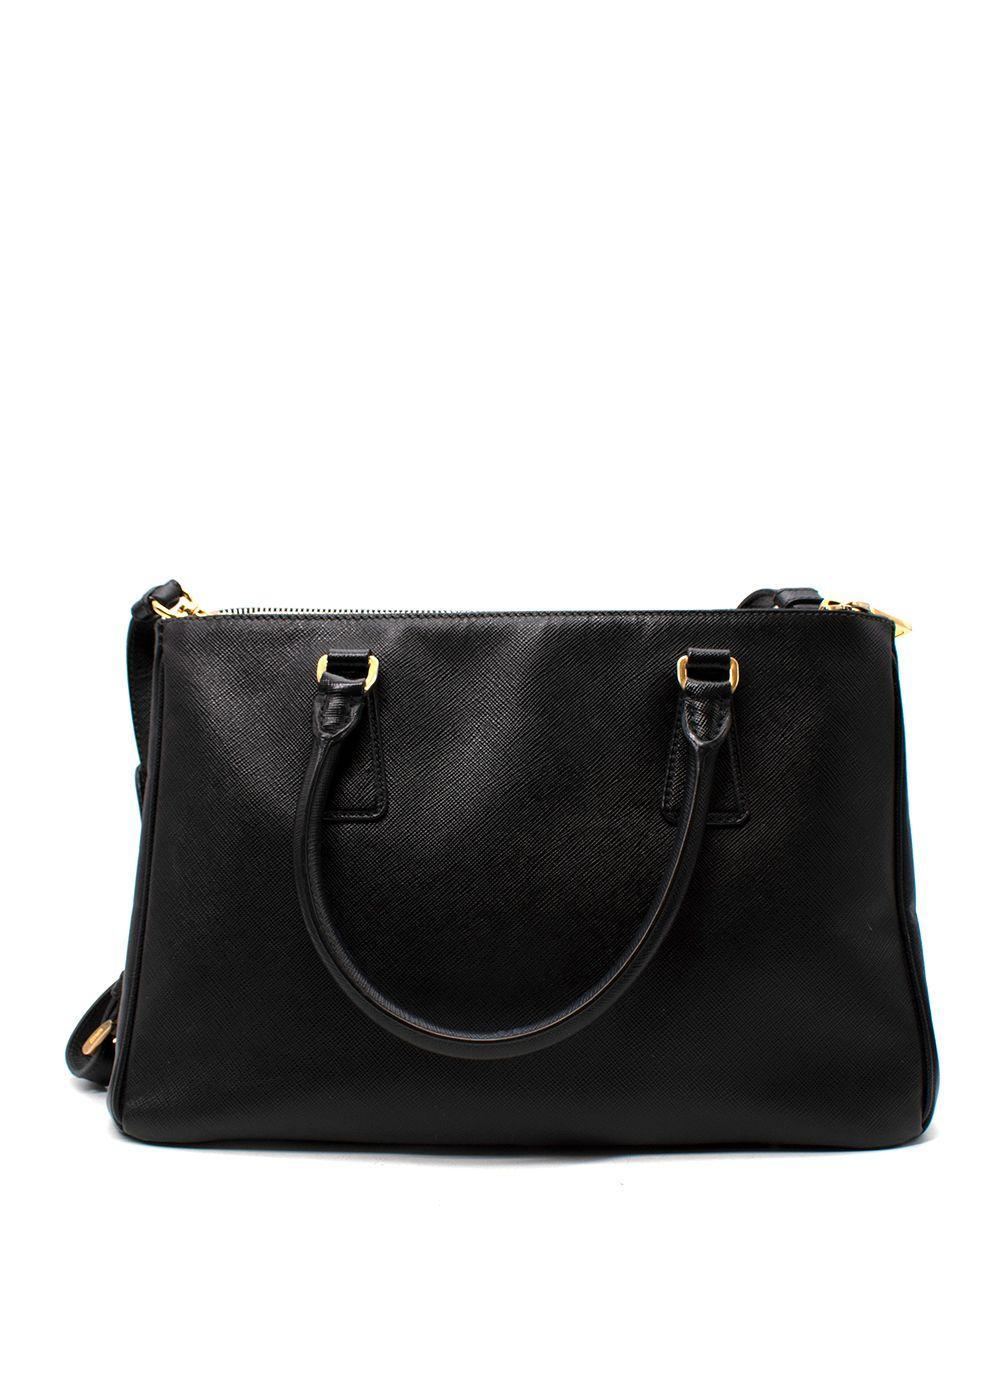 black saffiano leather bag